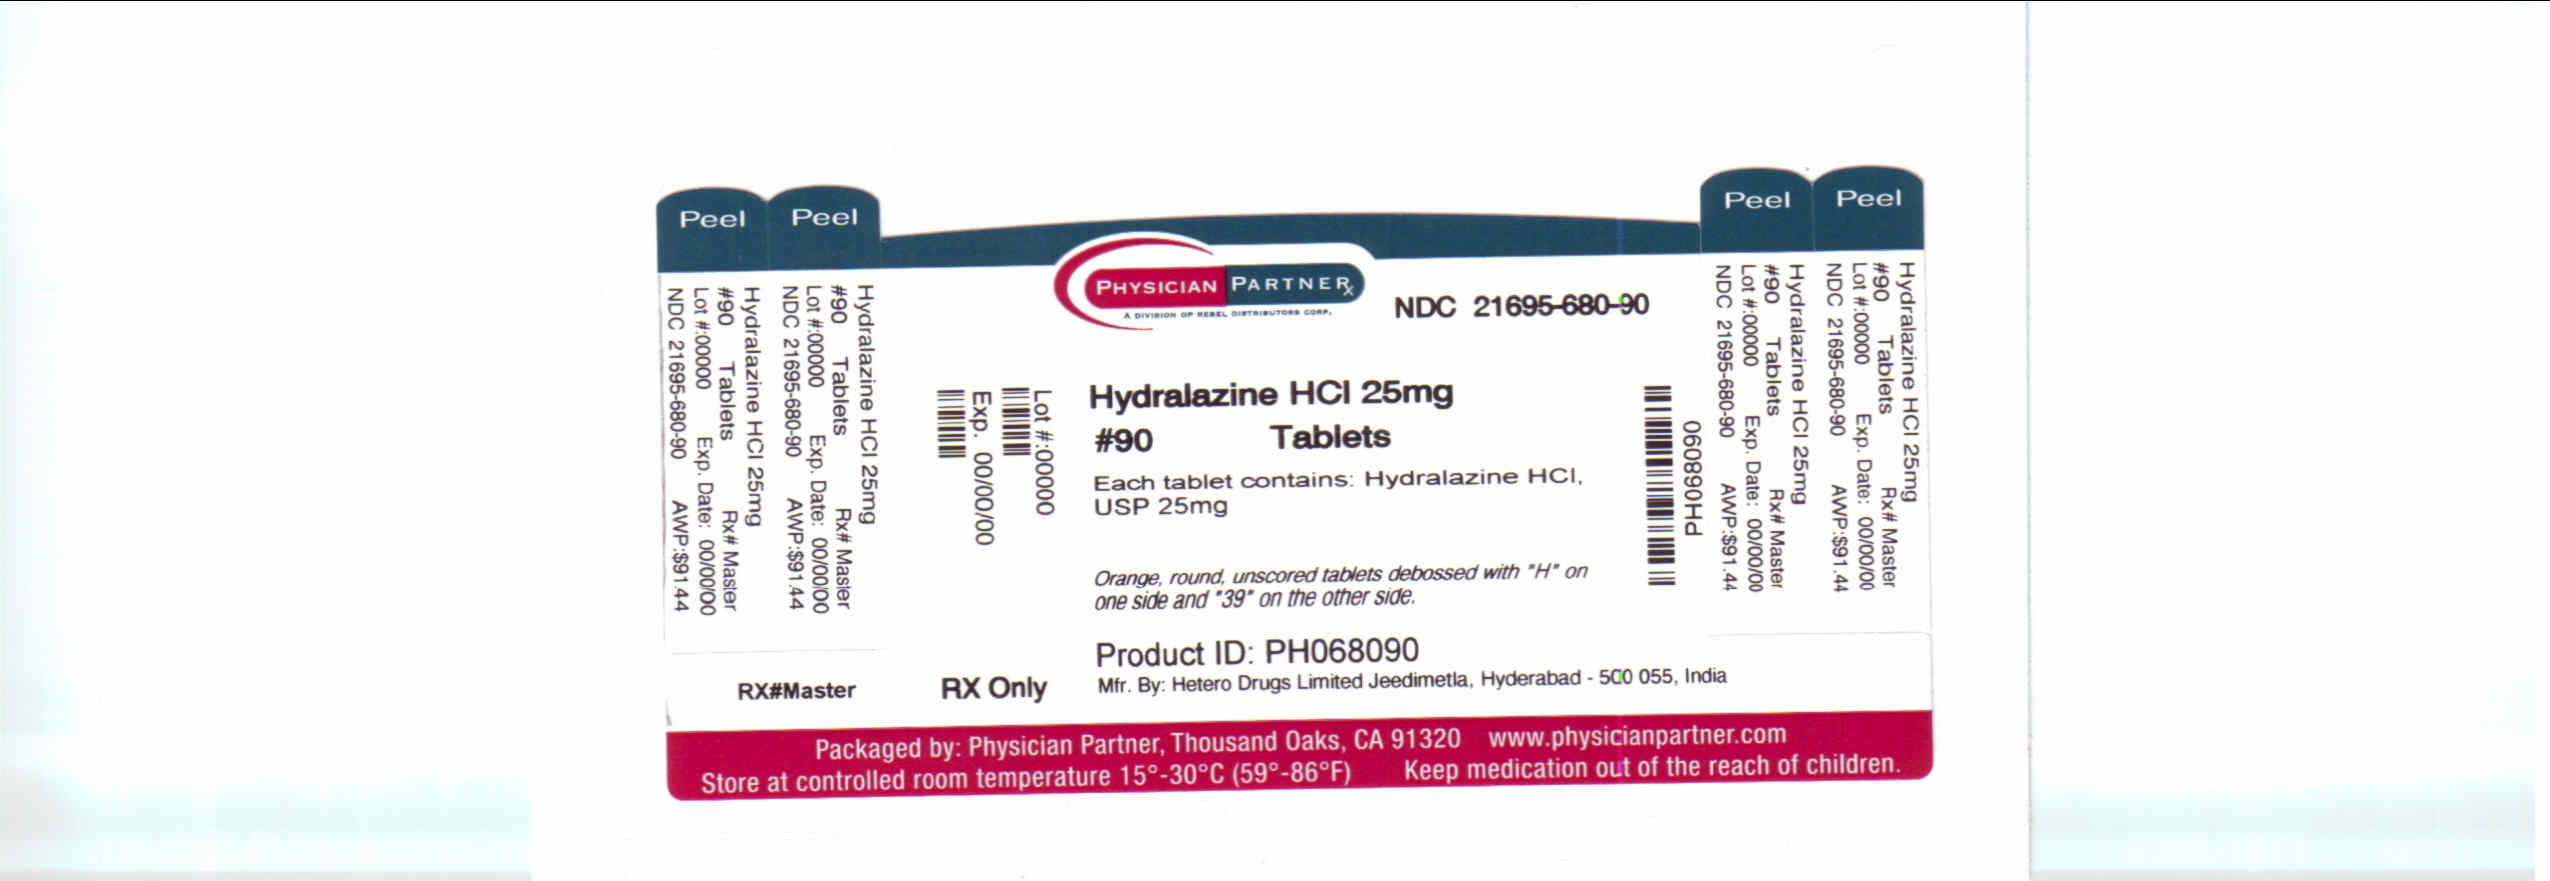 Hydrazaline HCL 25mg